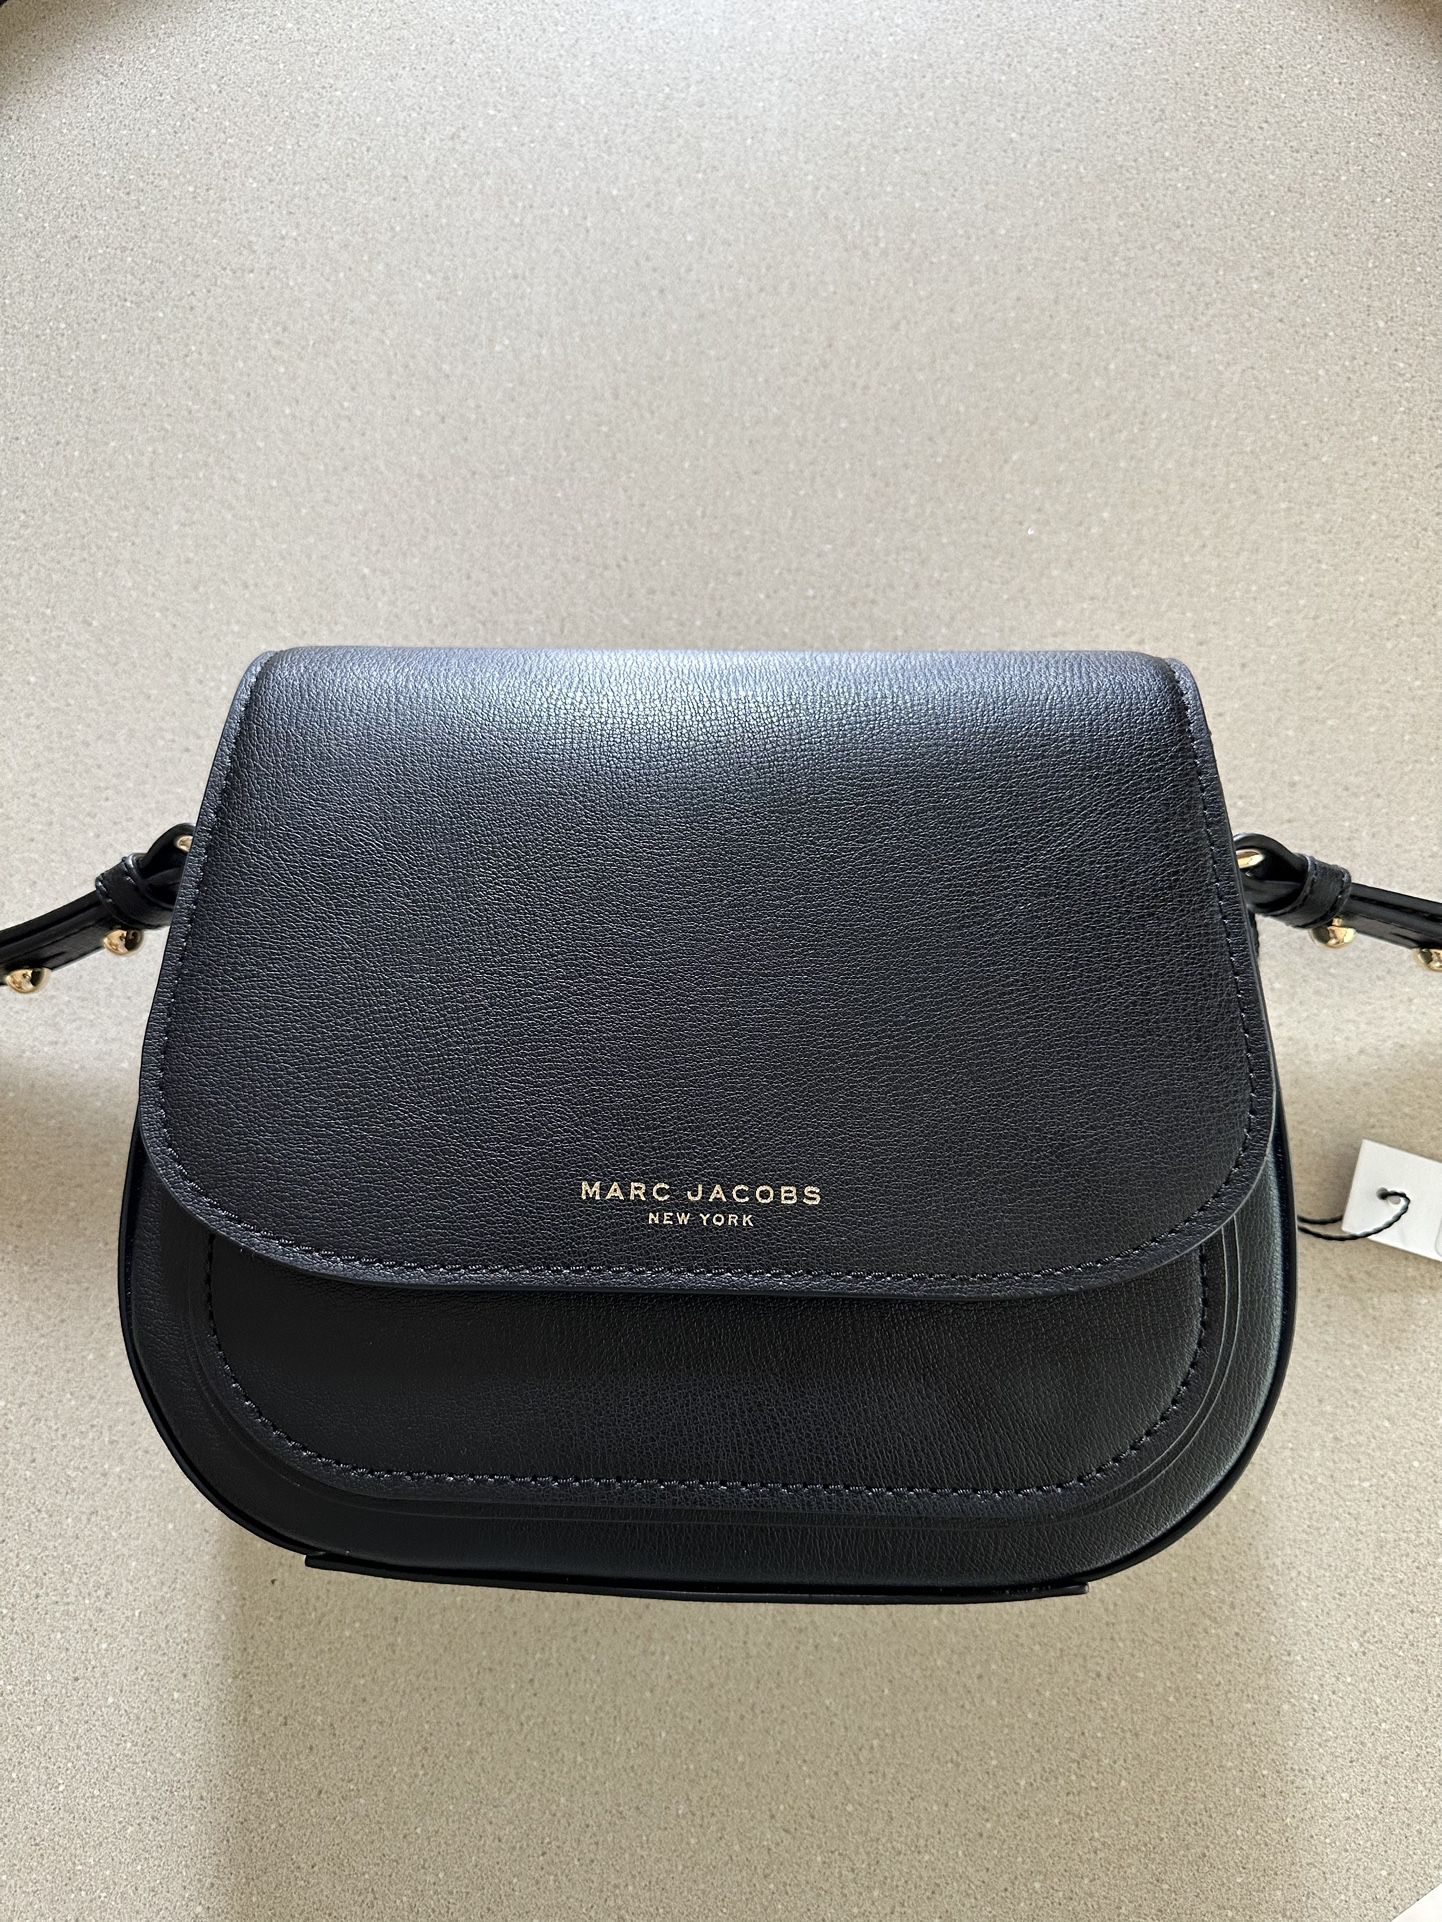 Marc Jacobs Leather Crossbody Bag/Purse